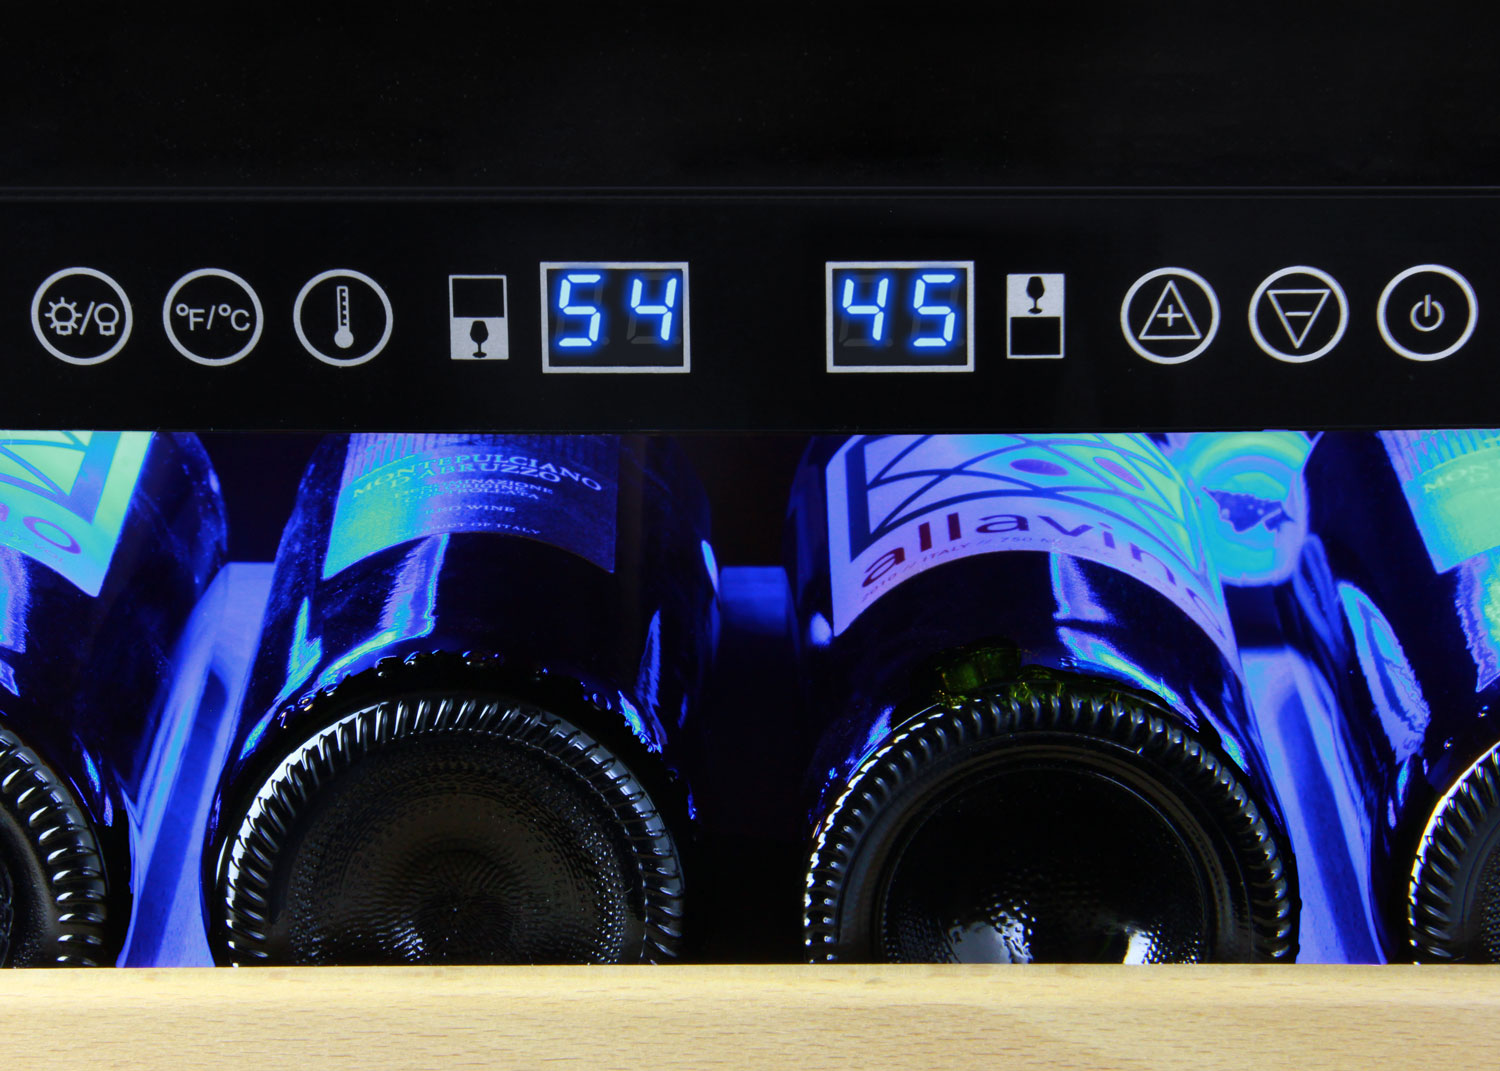 Allavino 48" Wide FlexCount Classic II Tru-Vino 346 Bottle Three Zone Stainless Steel Side-by-Side Wine Refrigerator